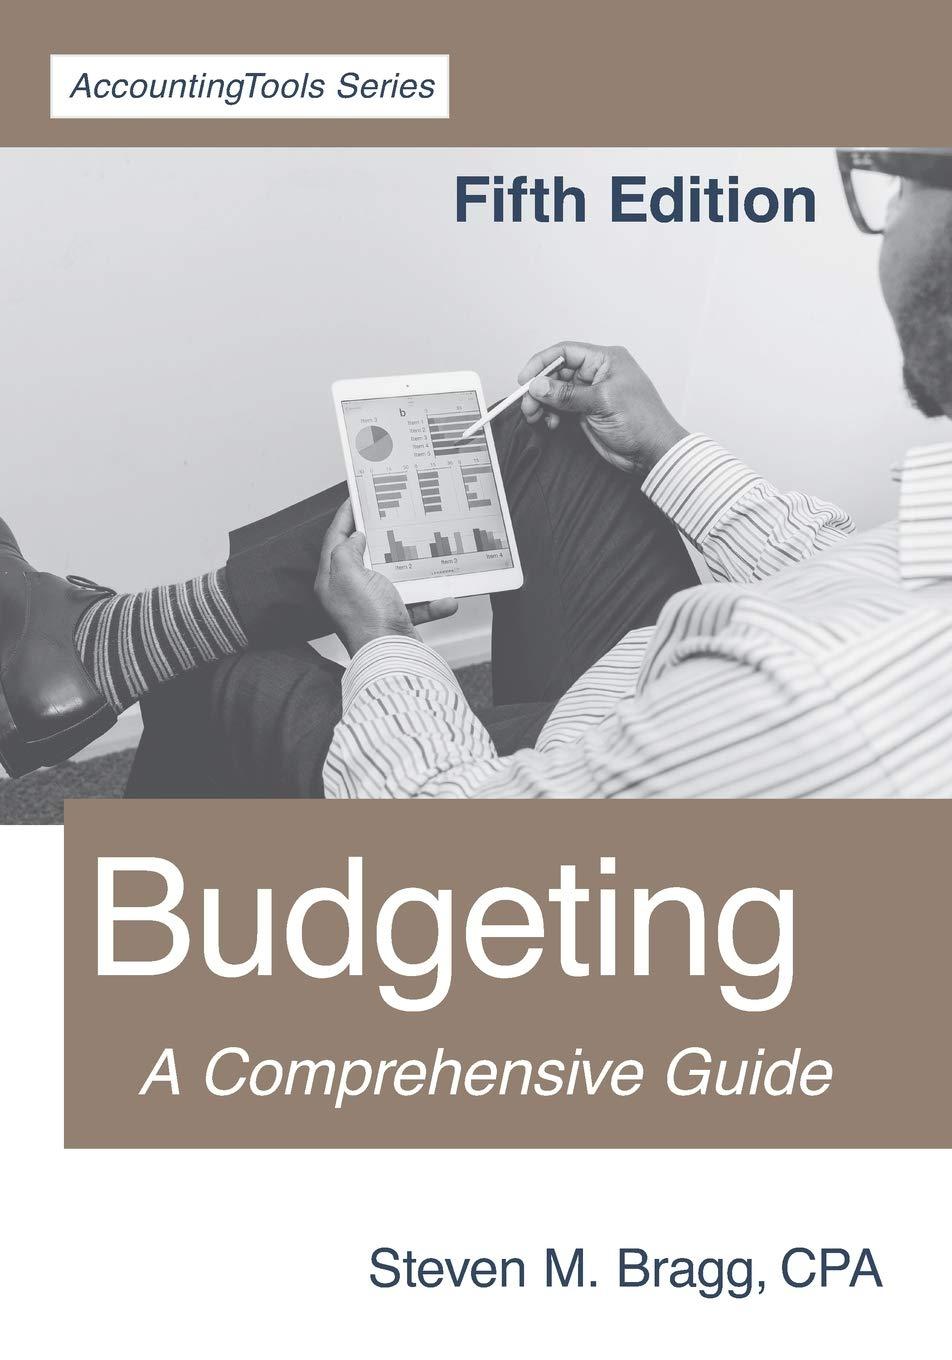 budgeting a comprehensive guide 5th edition steven m. bragg 1642210463, 978-1642210460